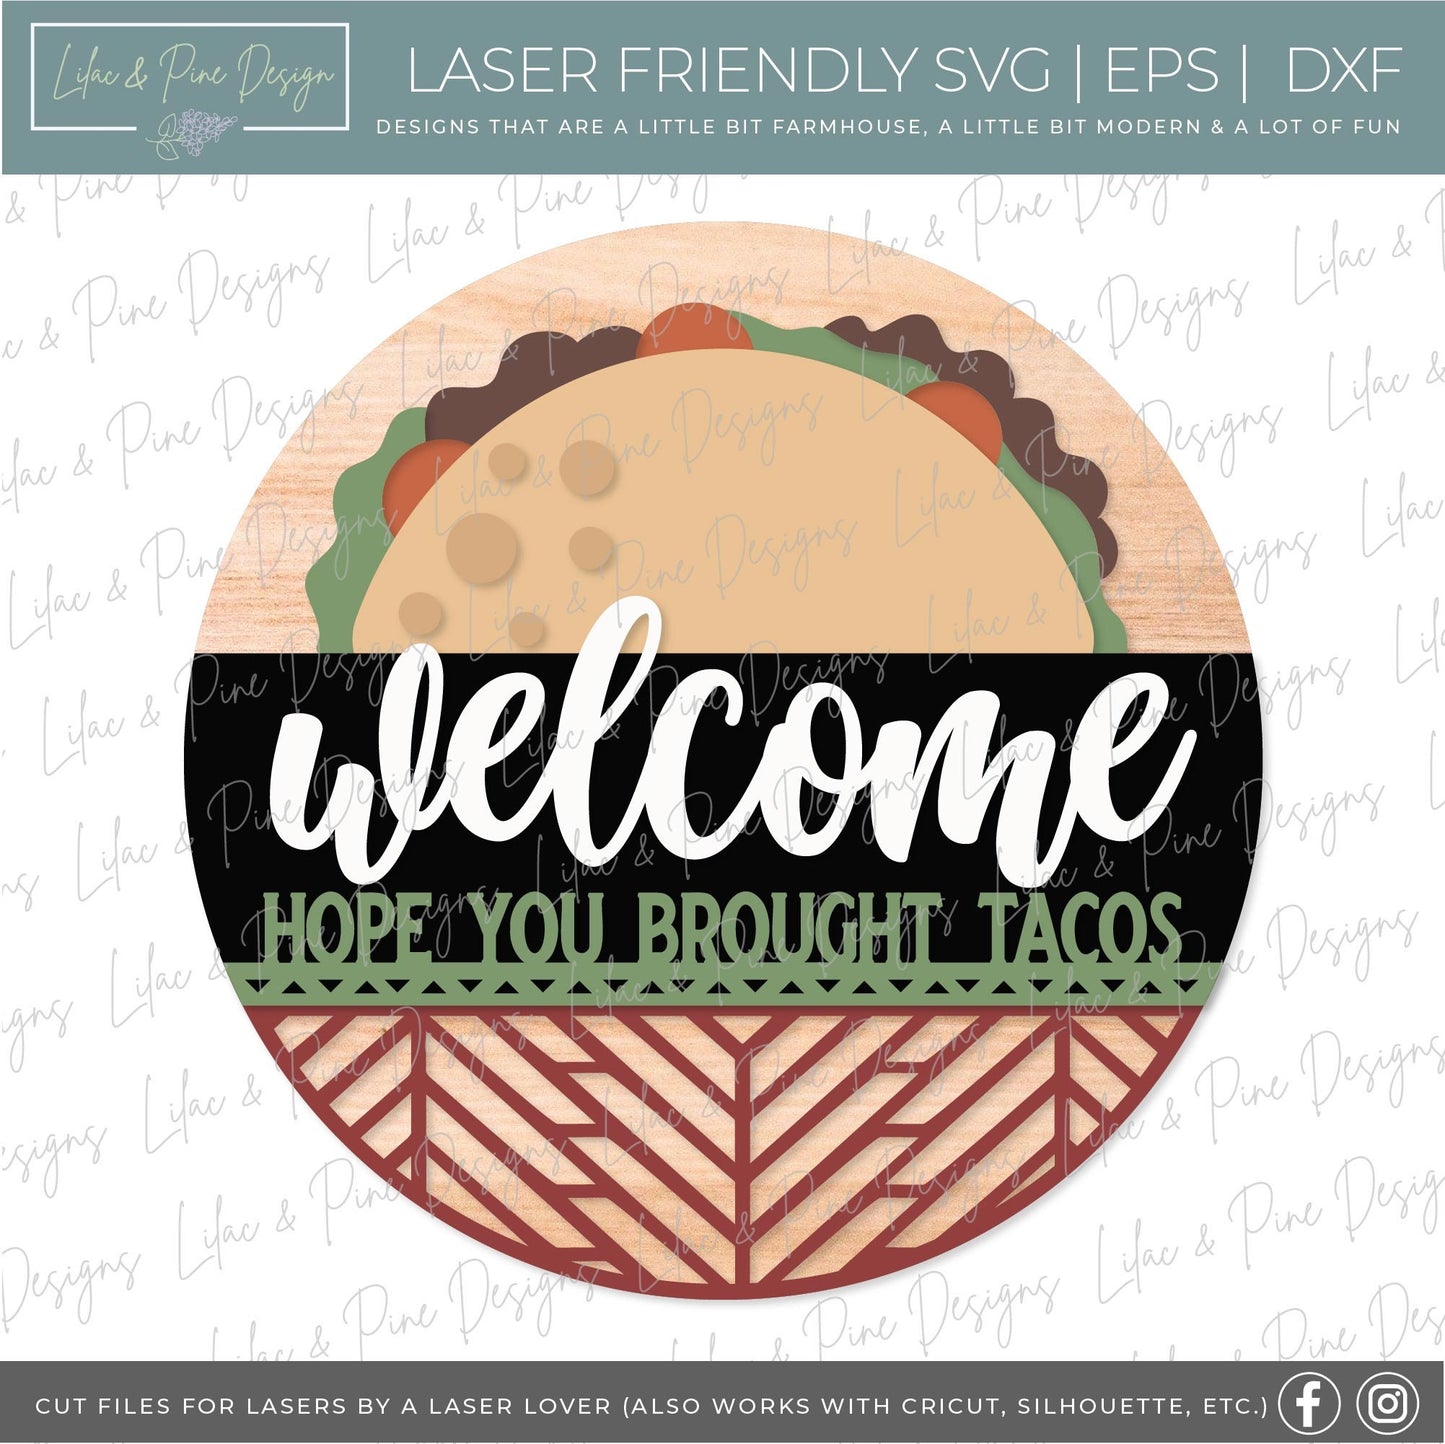 Taco welcome sign SVG, southwest style sign, Mexican food svg, cinco de mayo SVG, funny door hanger SVG, Glowforge Svg, laser cut file